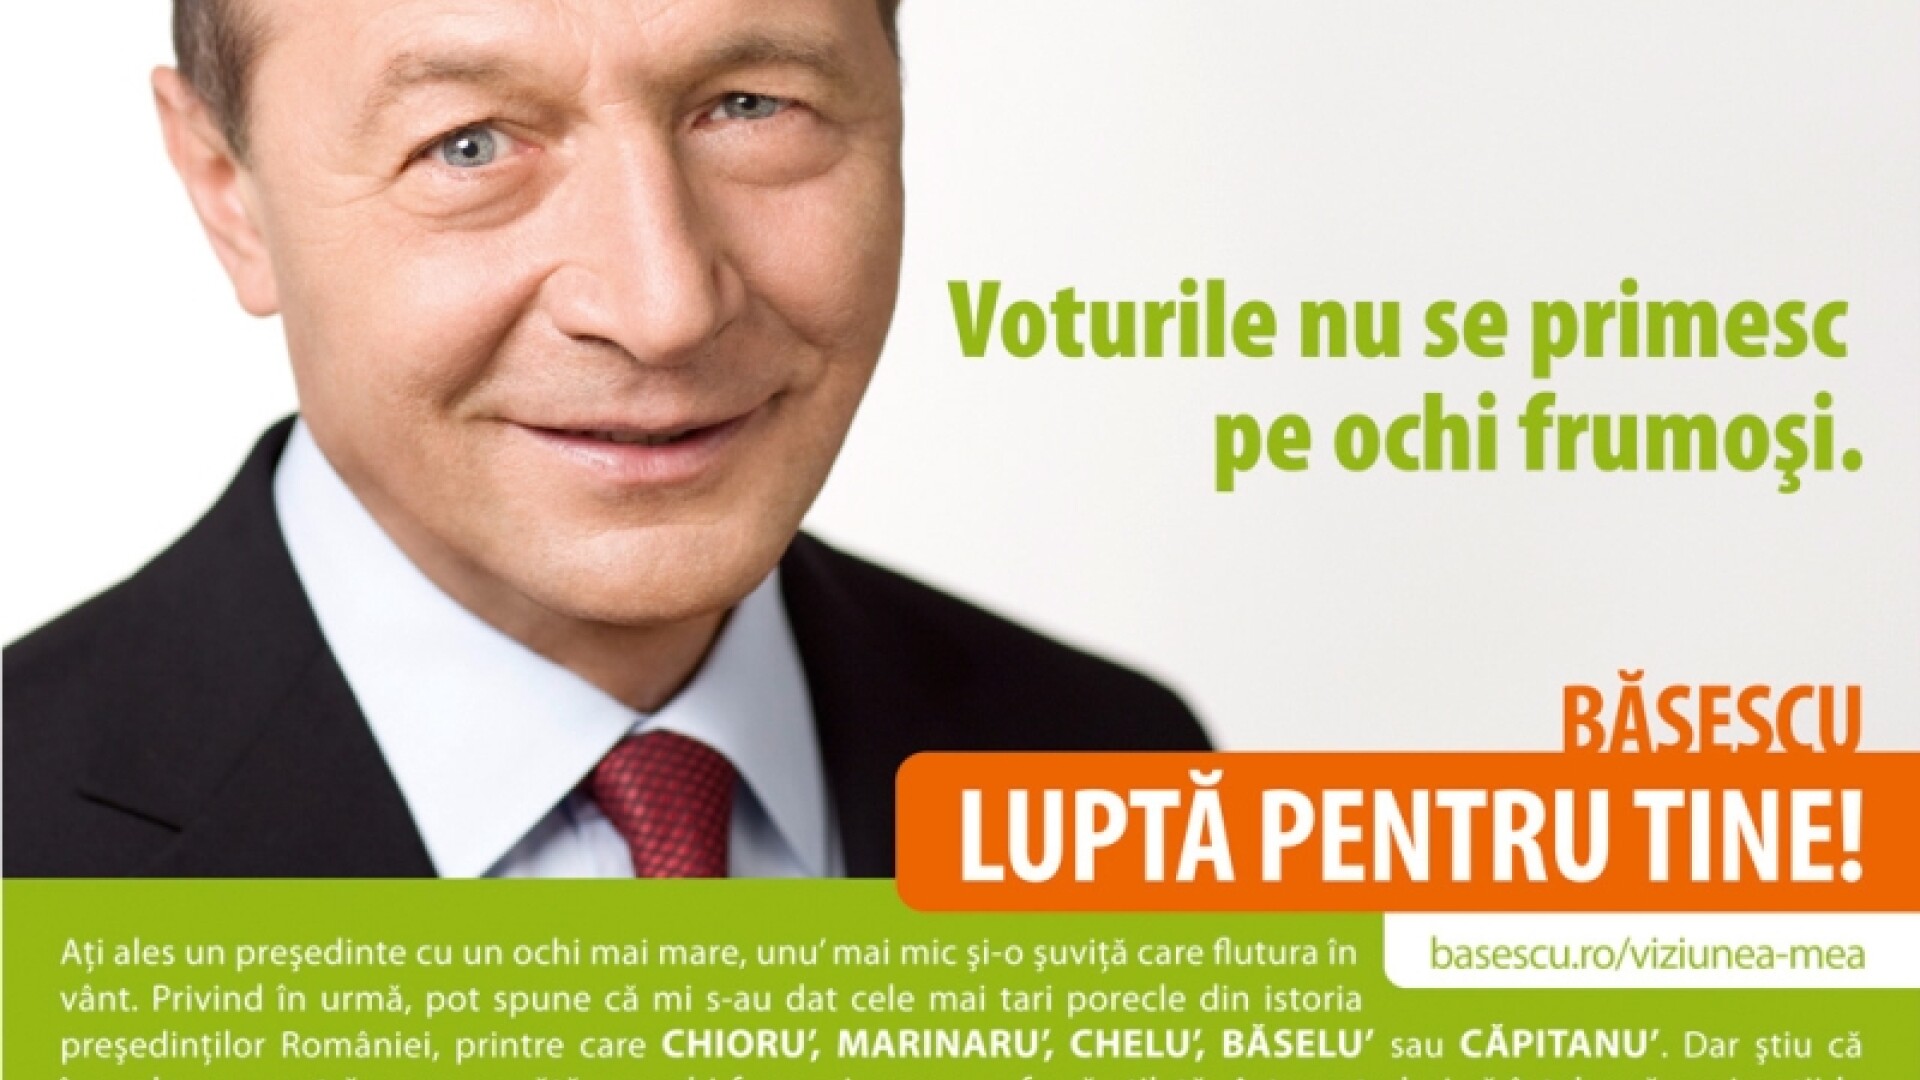 Basescu: Ati ales un presedinte cu un ochi mai mare, unu' mai mic